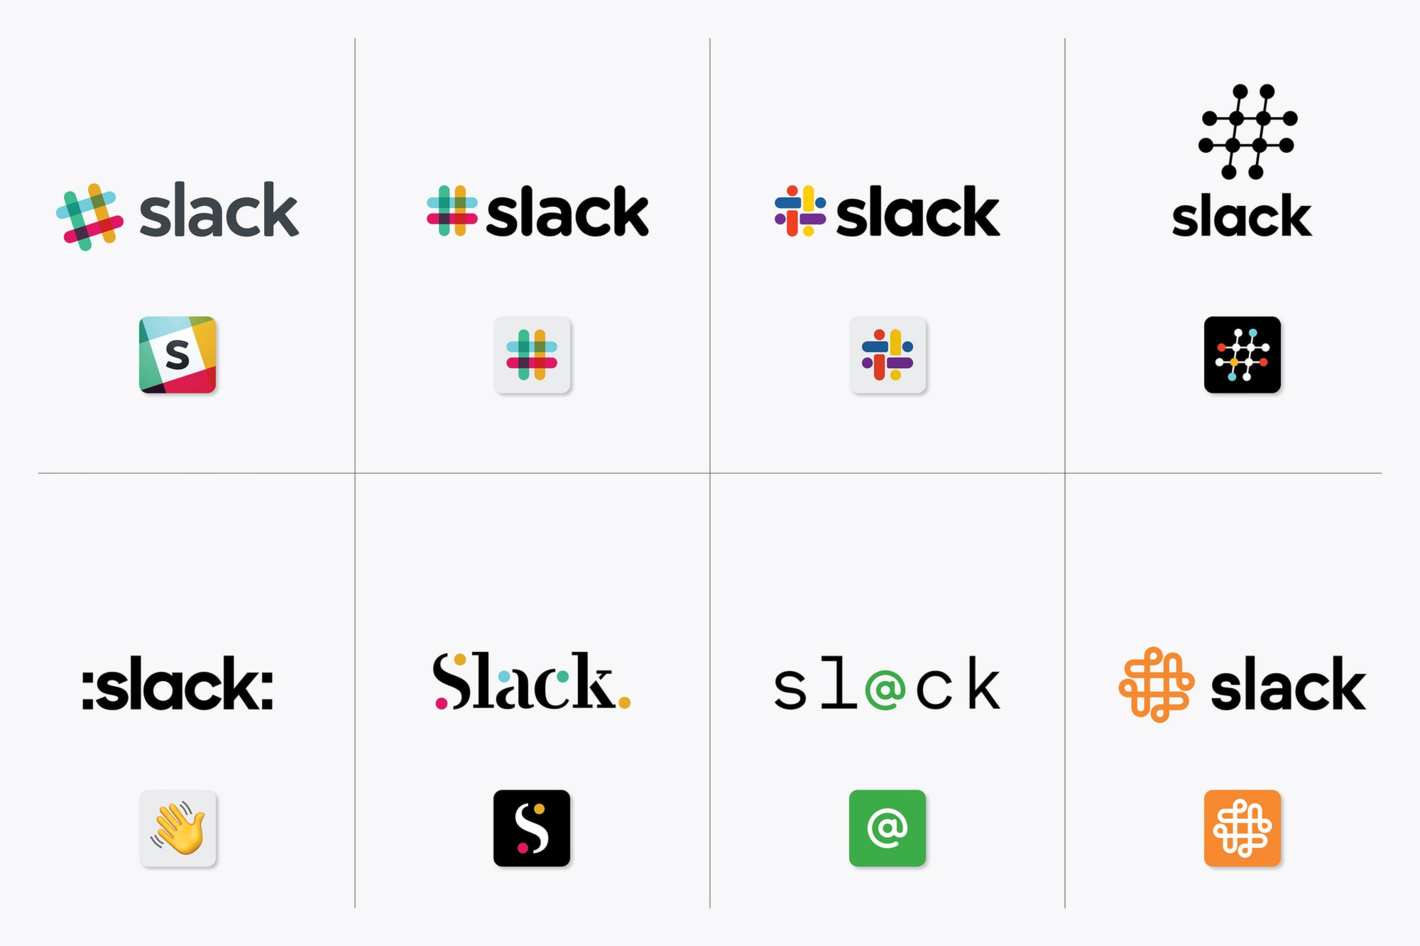 Slack Logo - New Slack Logo Looks Good Compared to Other Options